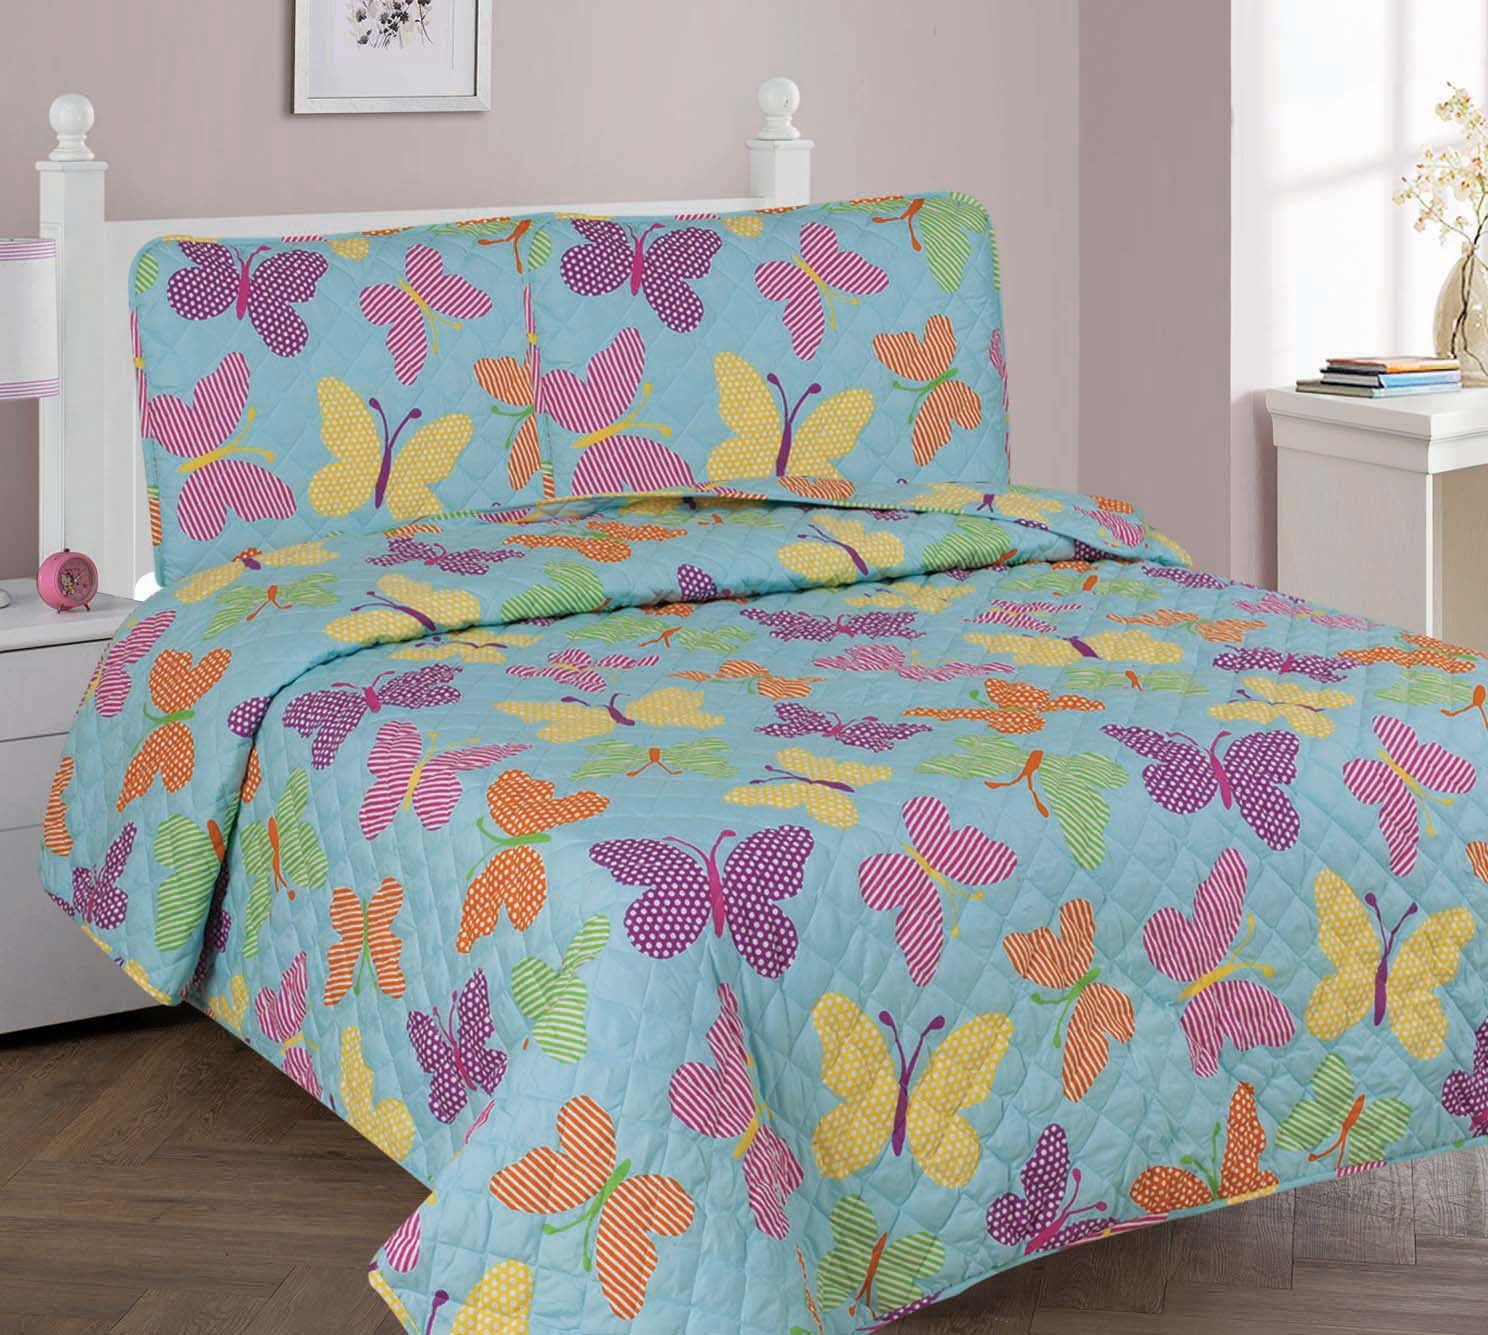 A72 Butterfly 2pcs Kids Quilt Bedspread Comforter Set Throw Blanket for Quilt 